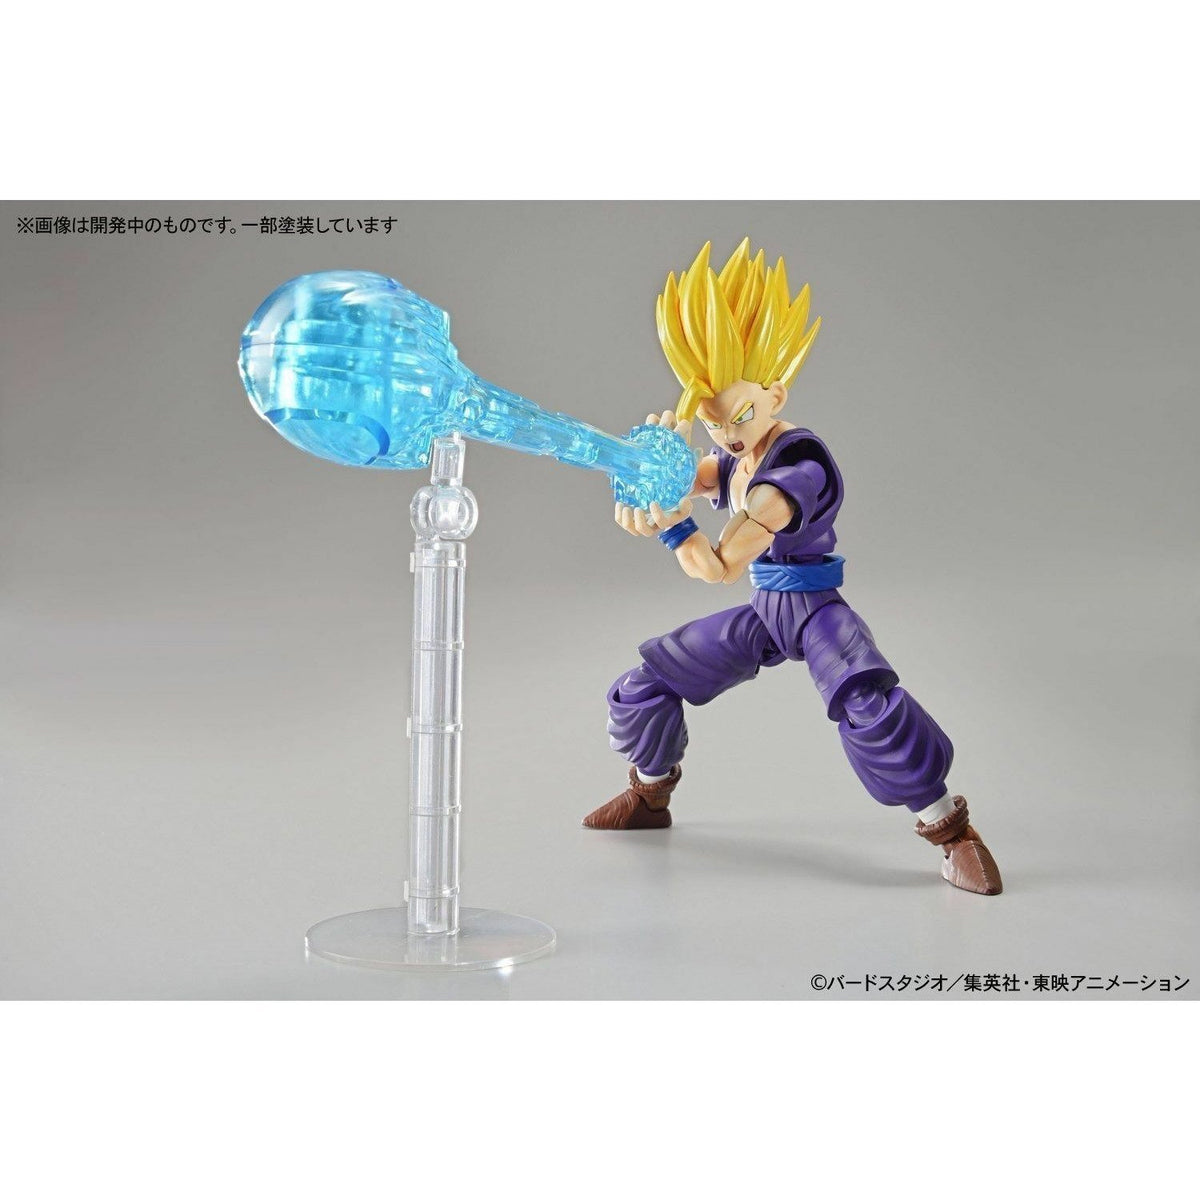 Dragon Ball Figure-rise Standard Super Saiyan 2 Son Gohan-Bandai-Ace Cards &amp; Collectibles